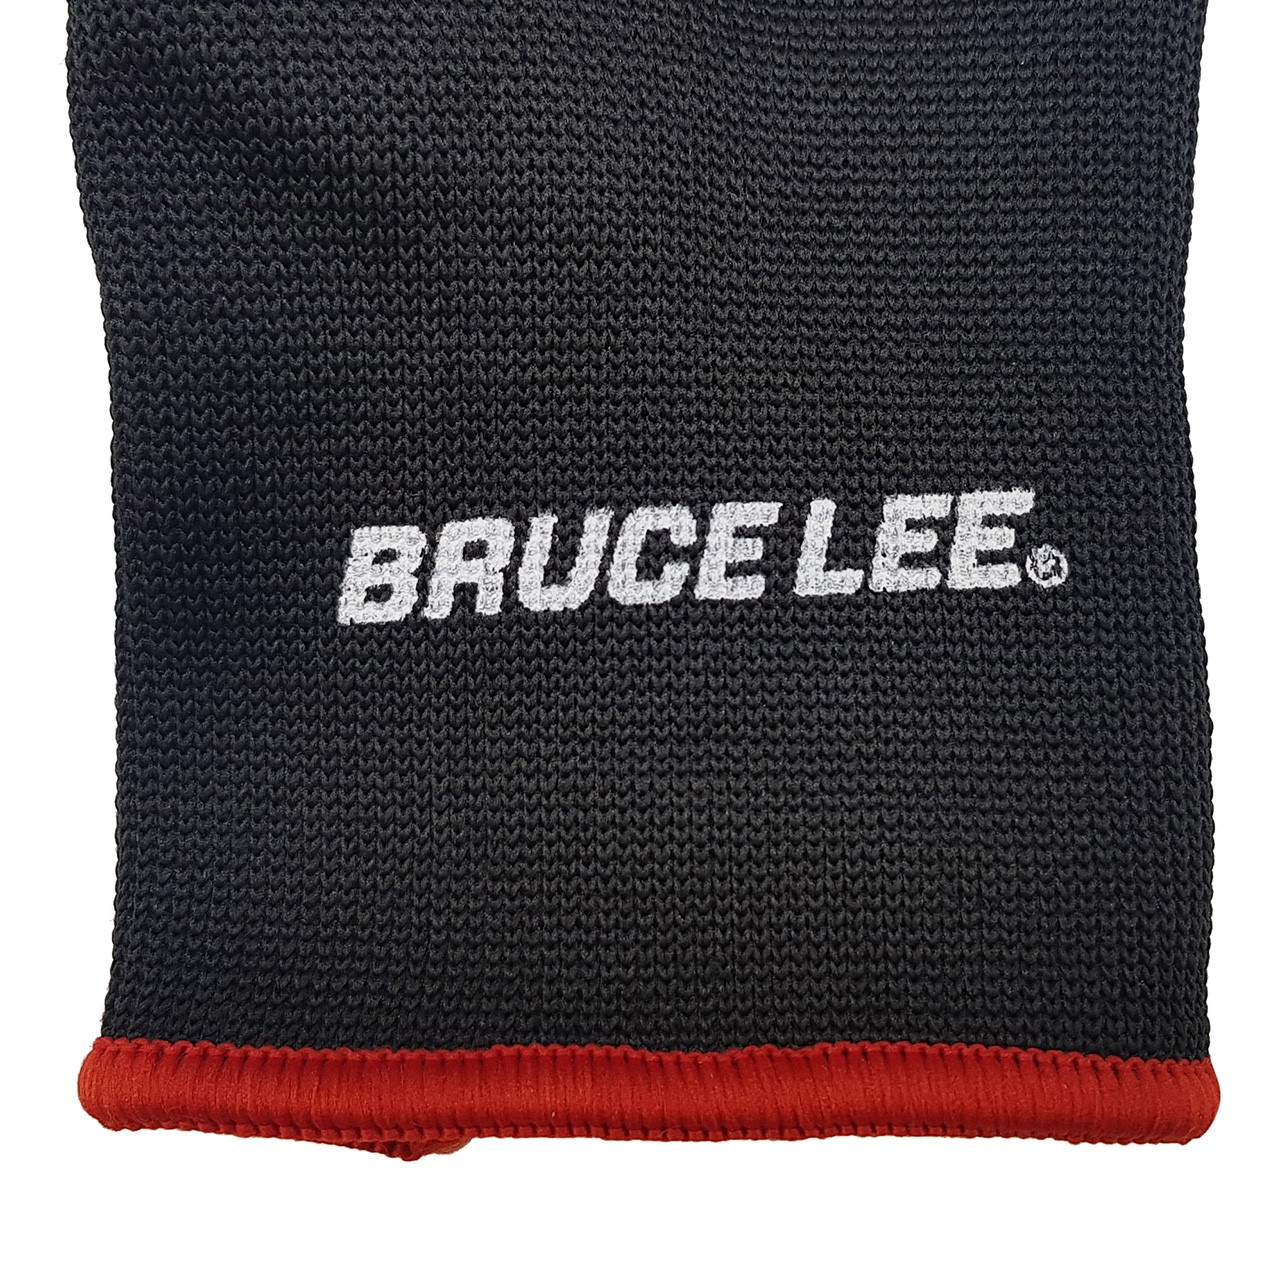 Bruce Lee Easy Fit Boxing Bandages